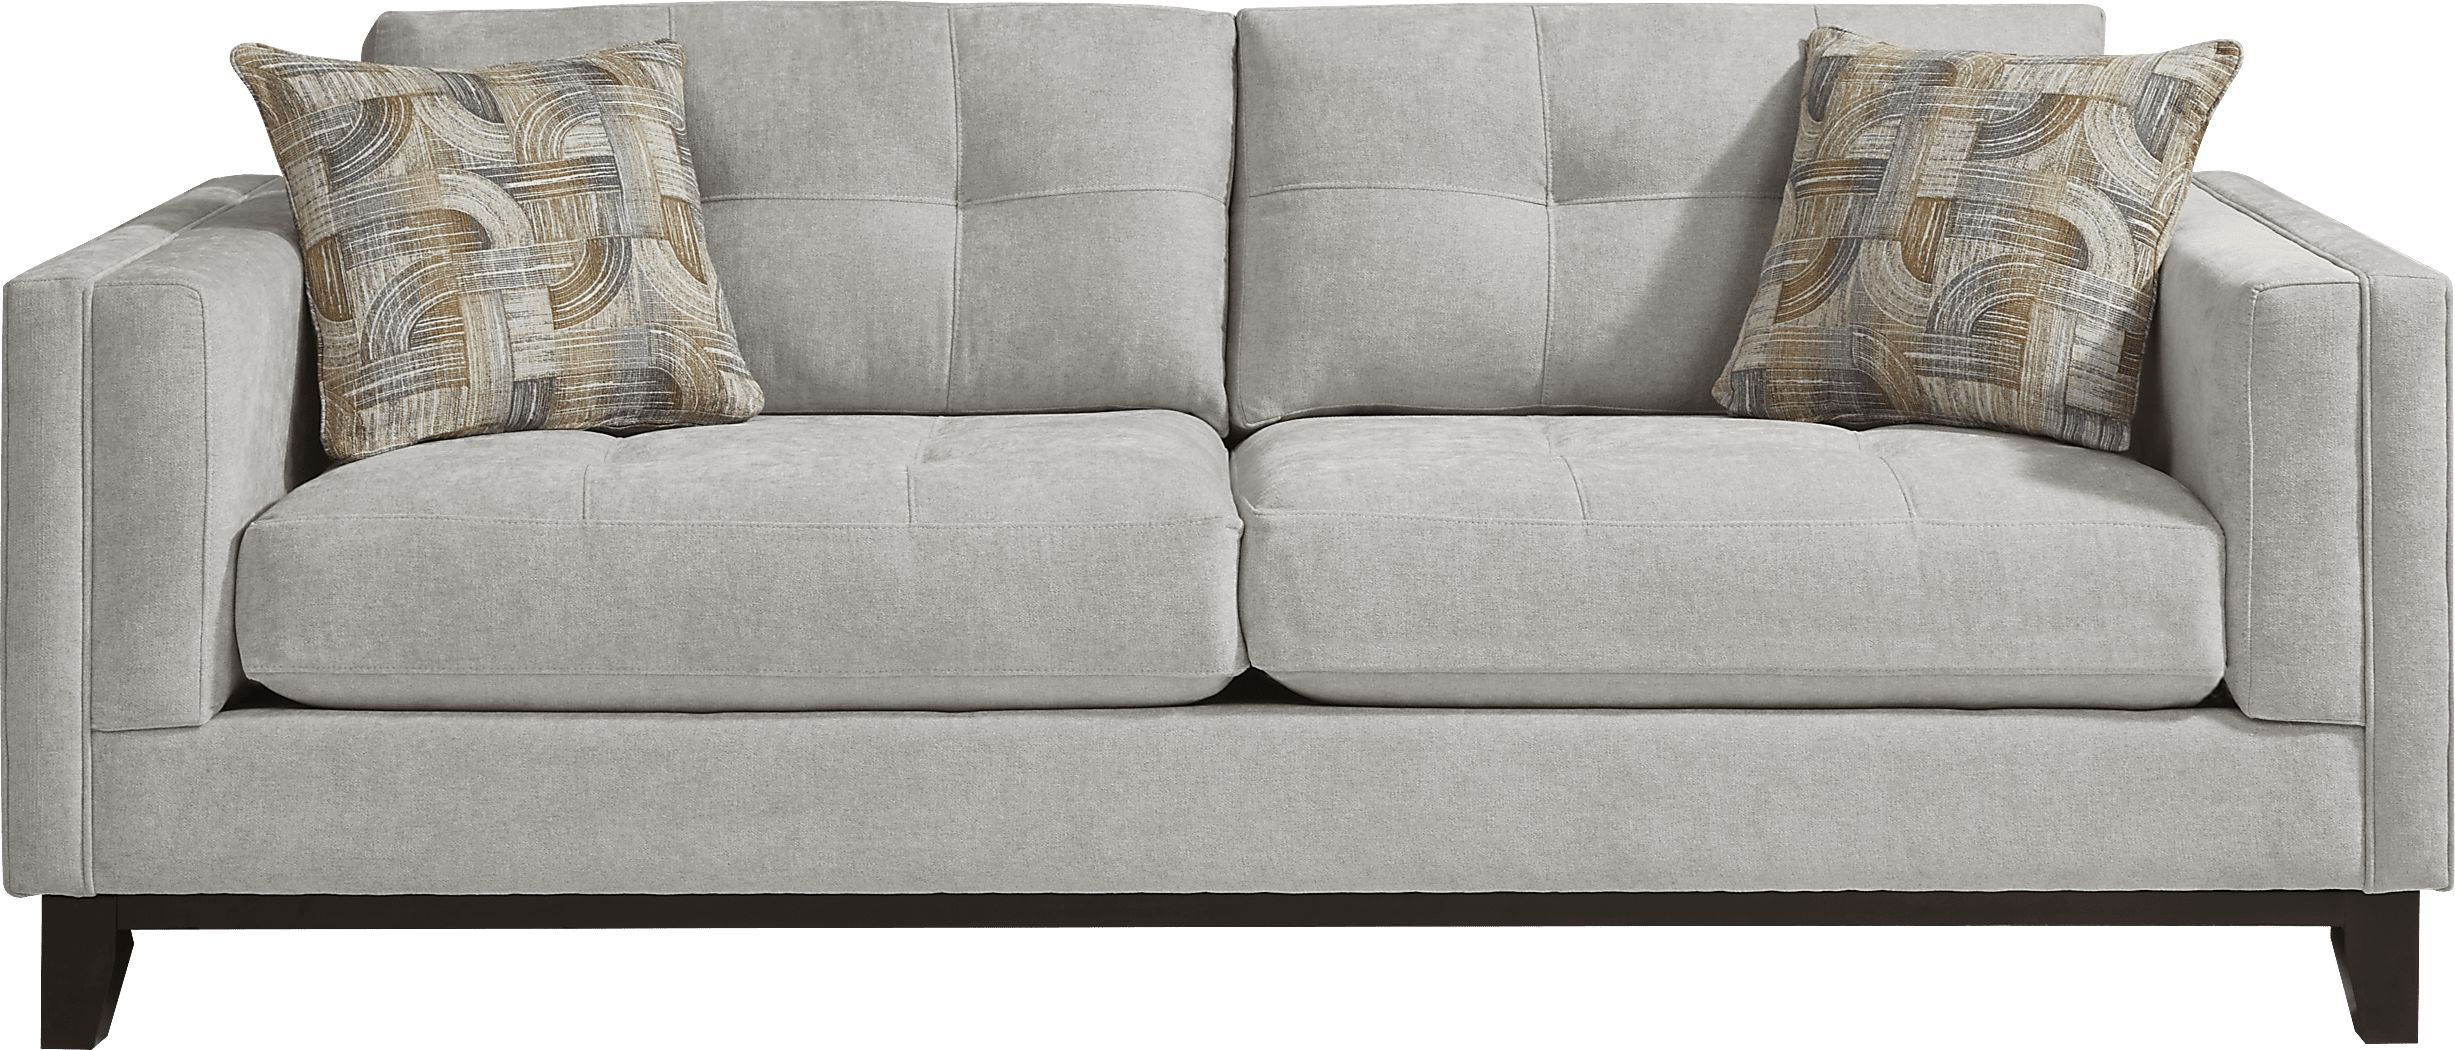 Cindy Crawford Home Everleigh Place Oyster Sleeper Sofa